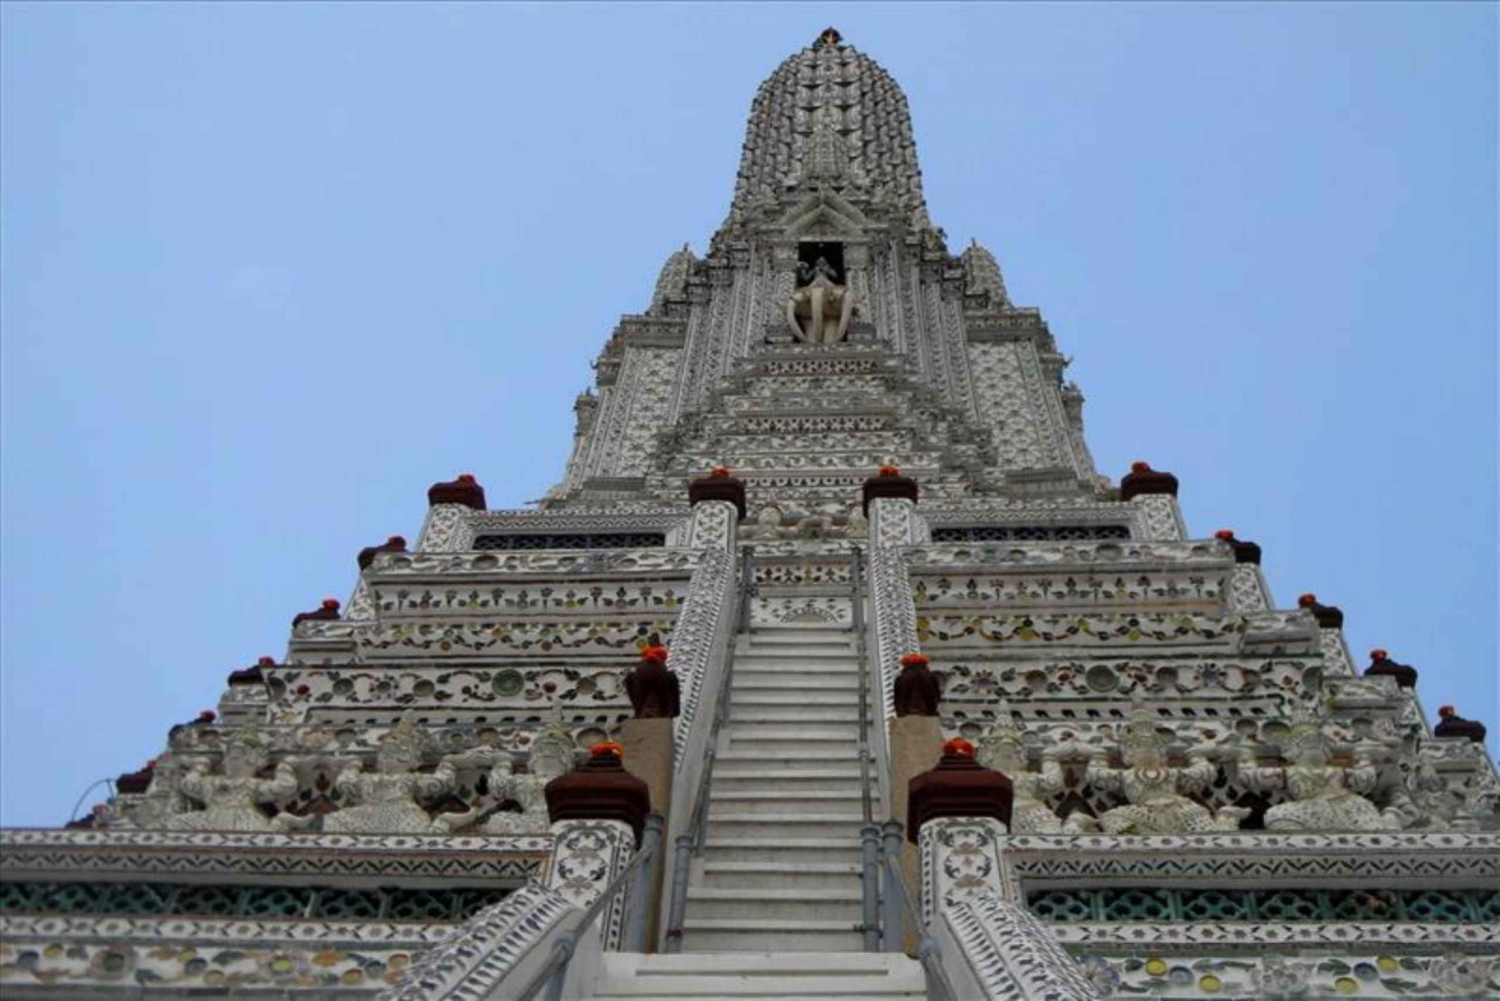 Bangkok: Wat Arun Self-Guided Audio Tour